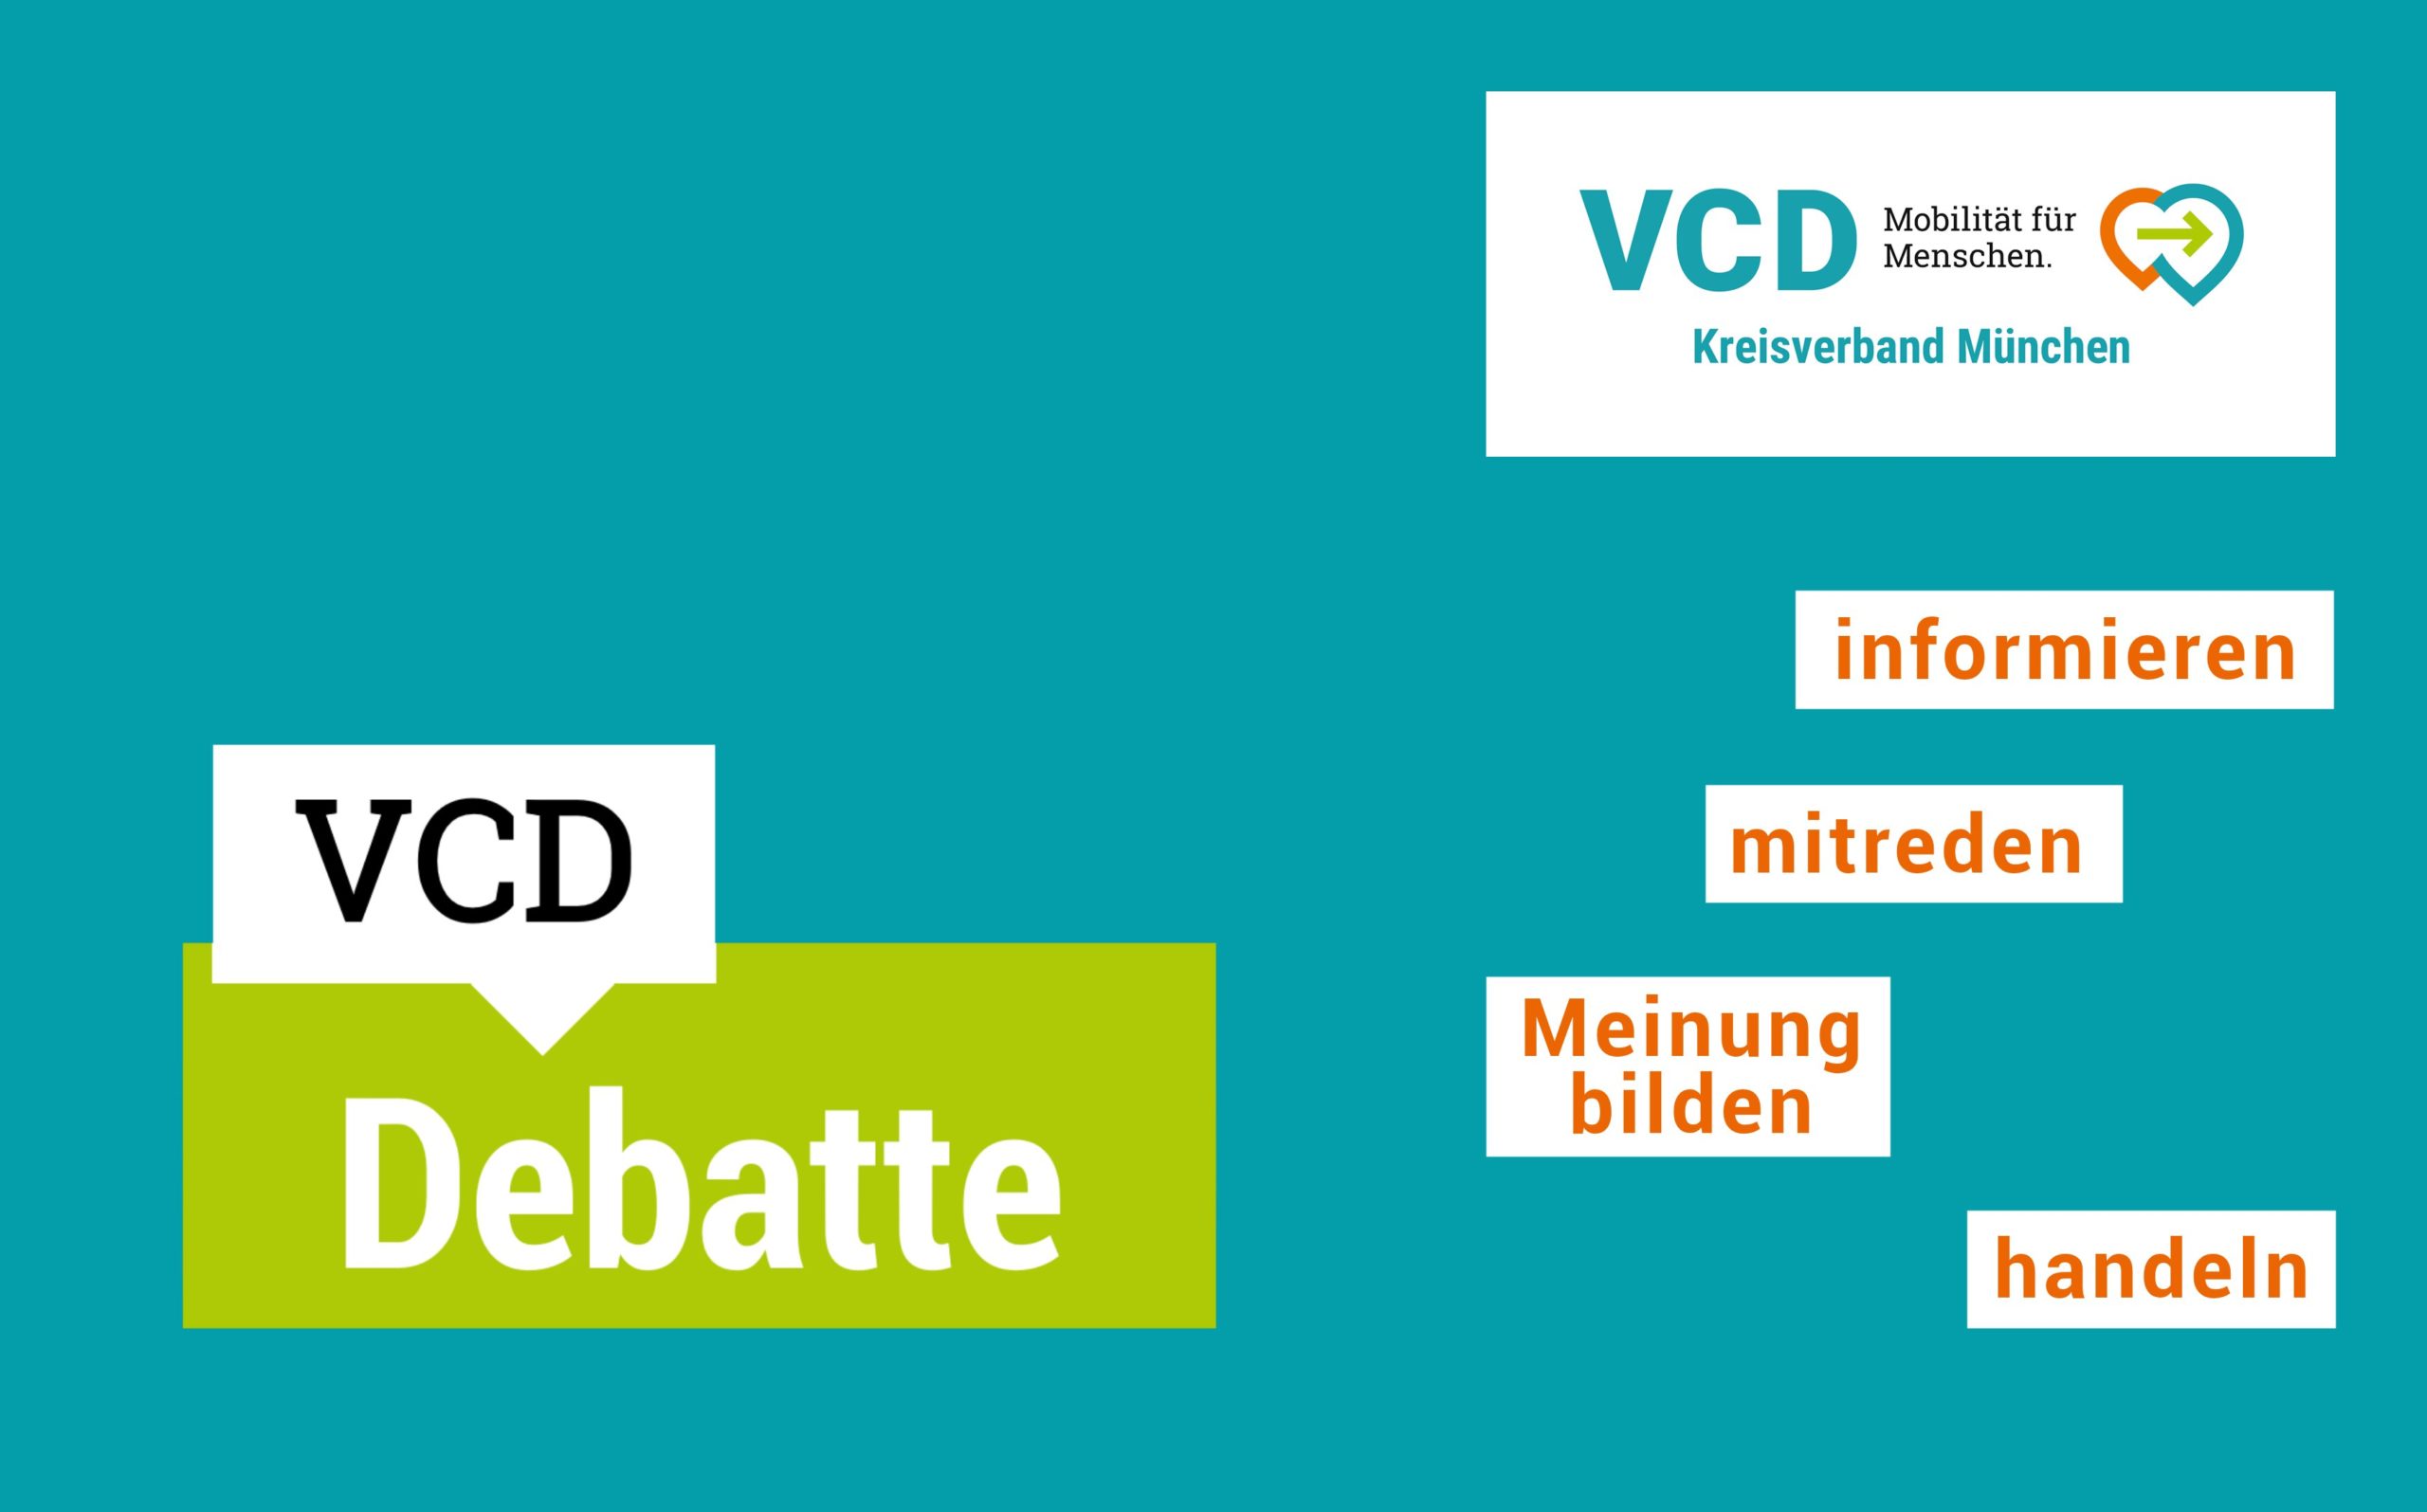 VCD Debatte